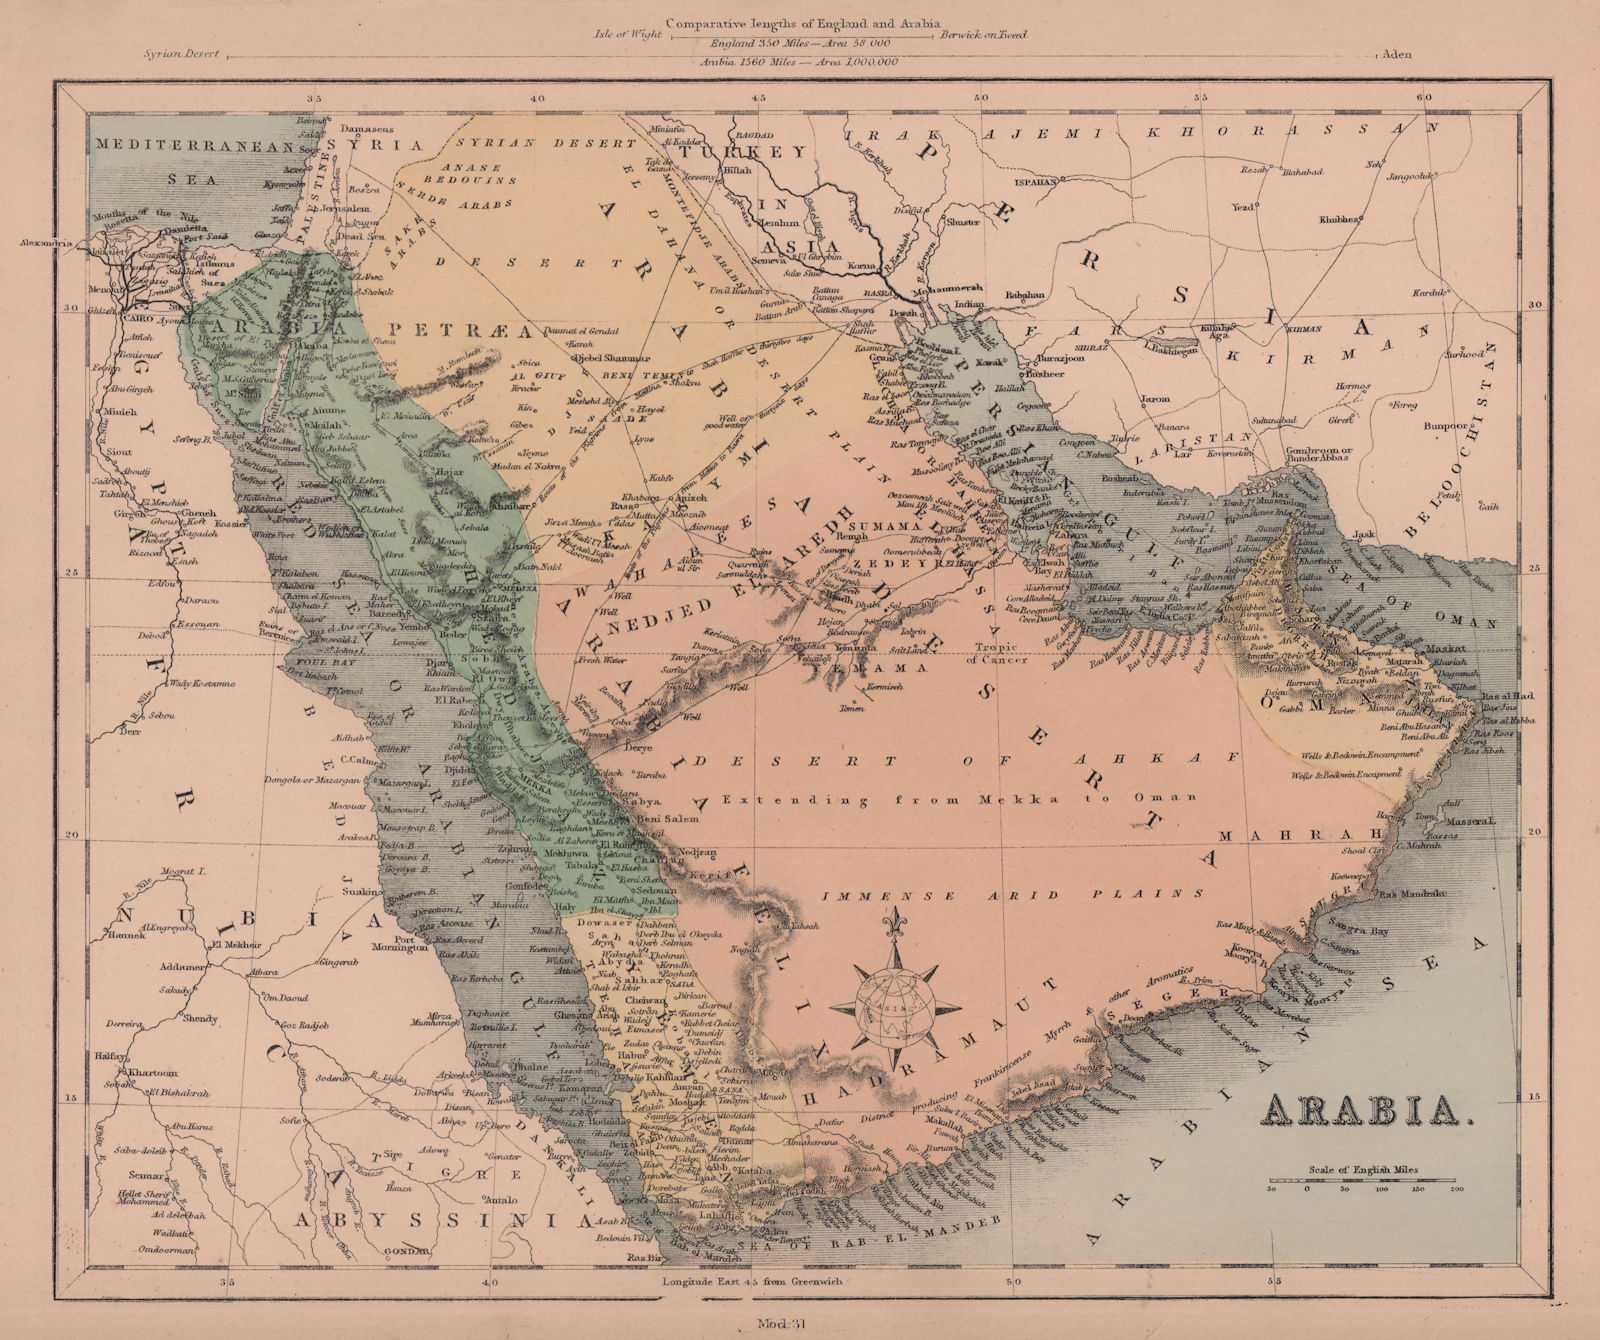 Arabia. Debai (Dubai) Abothubbee (Abu Dhabi) Grane (Kuwait). HUGHES 1876 map